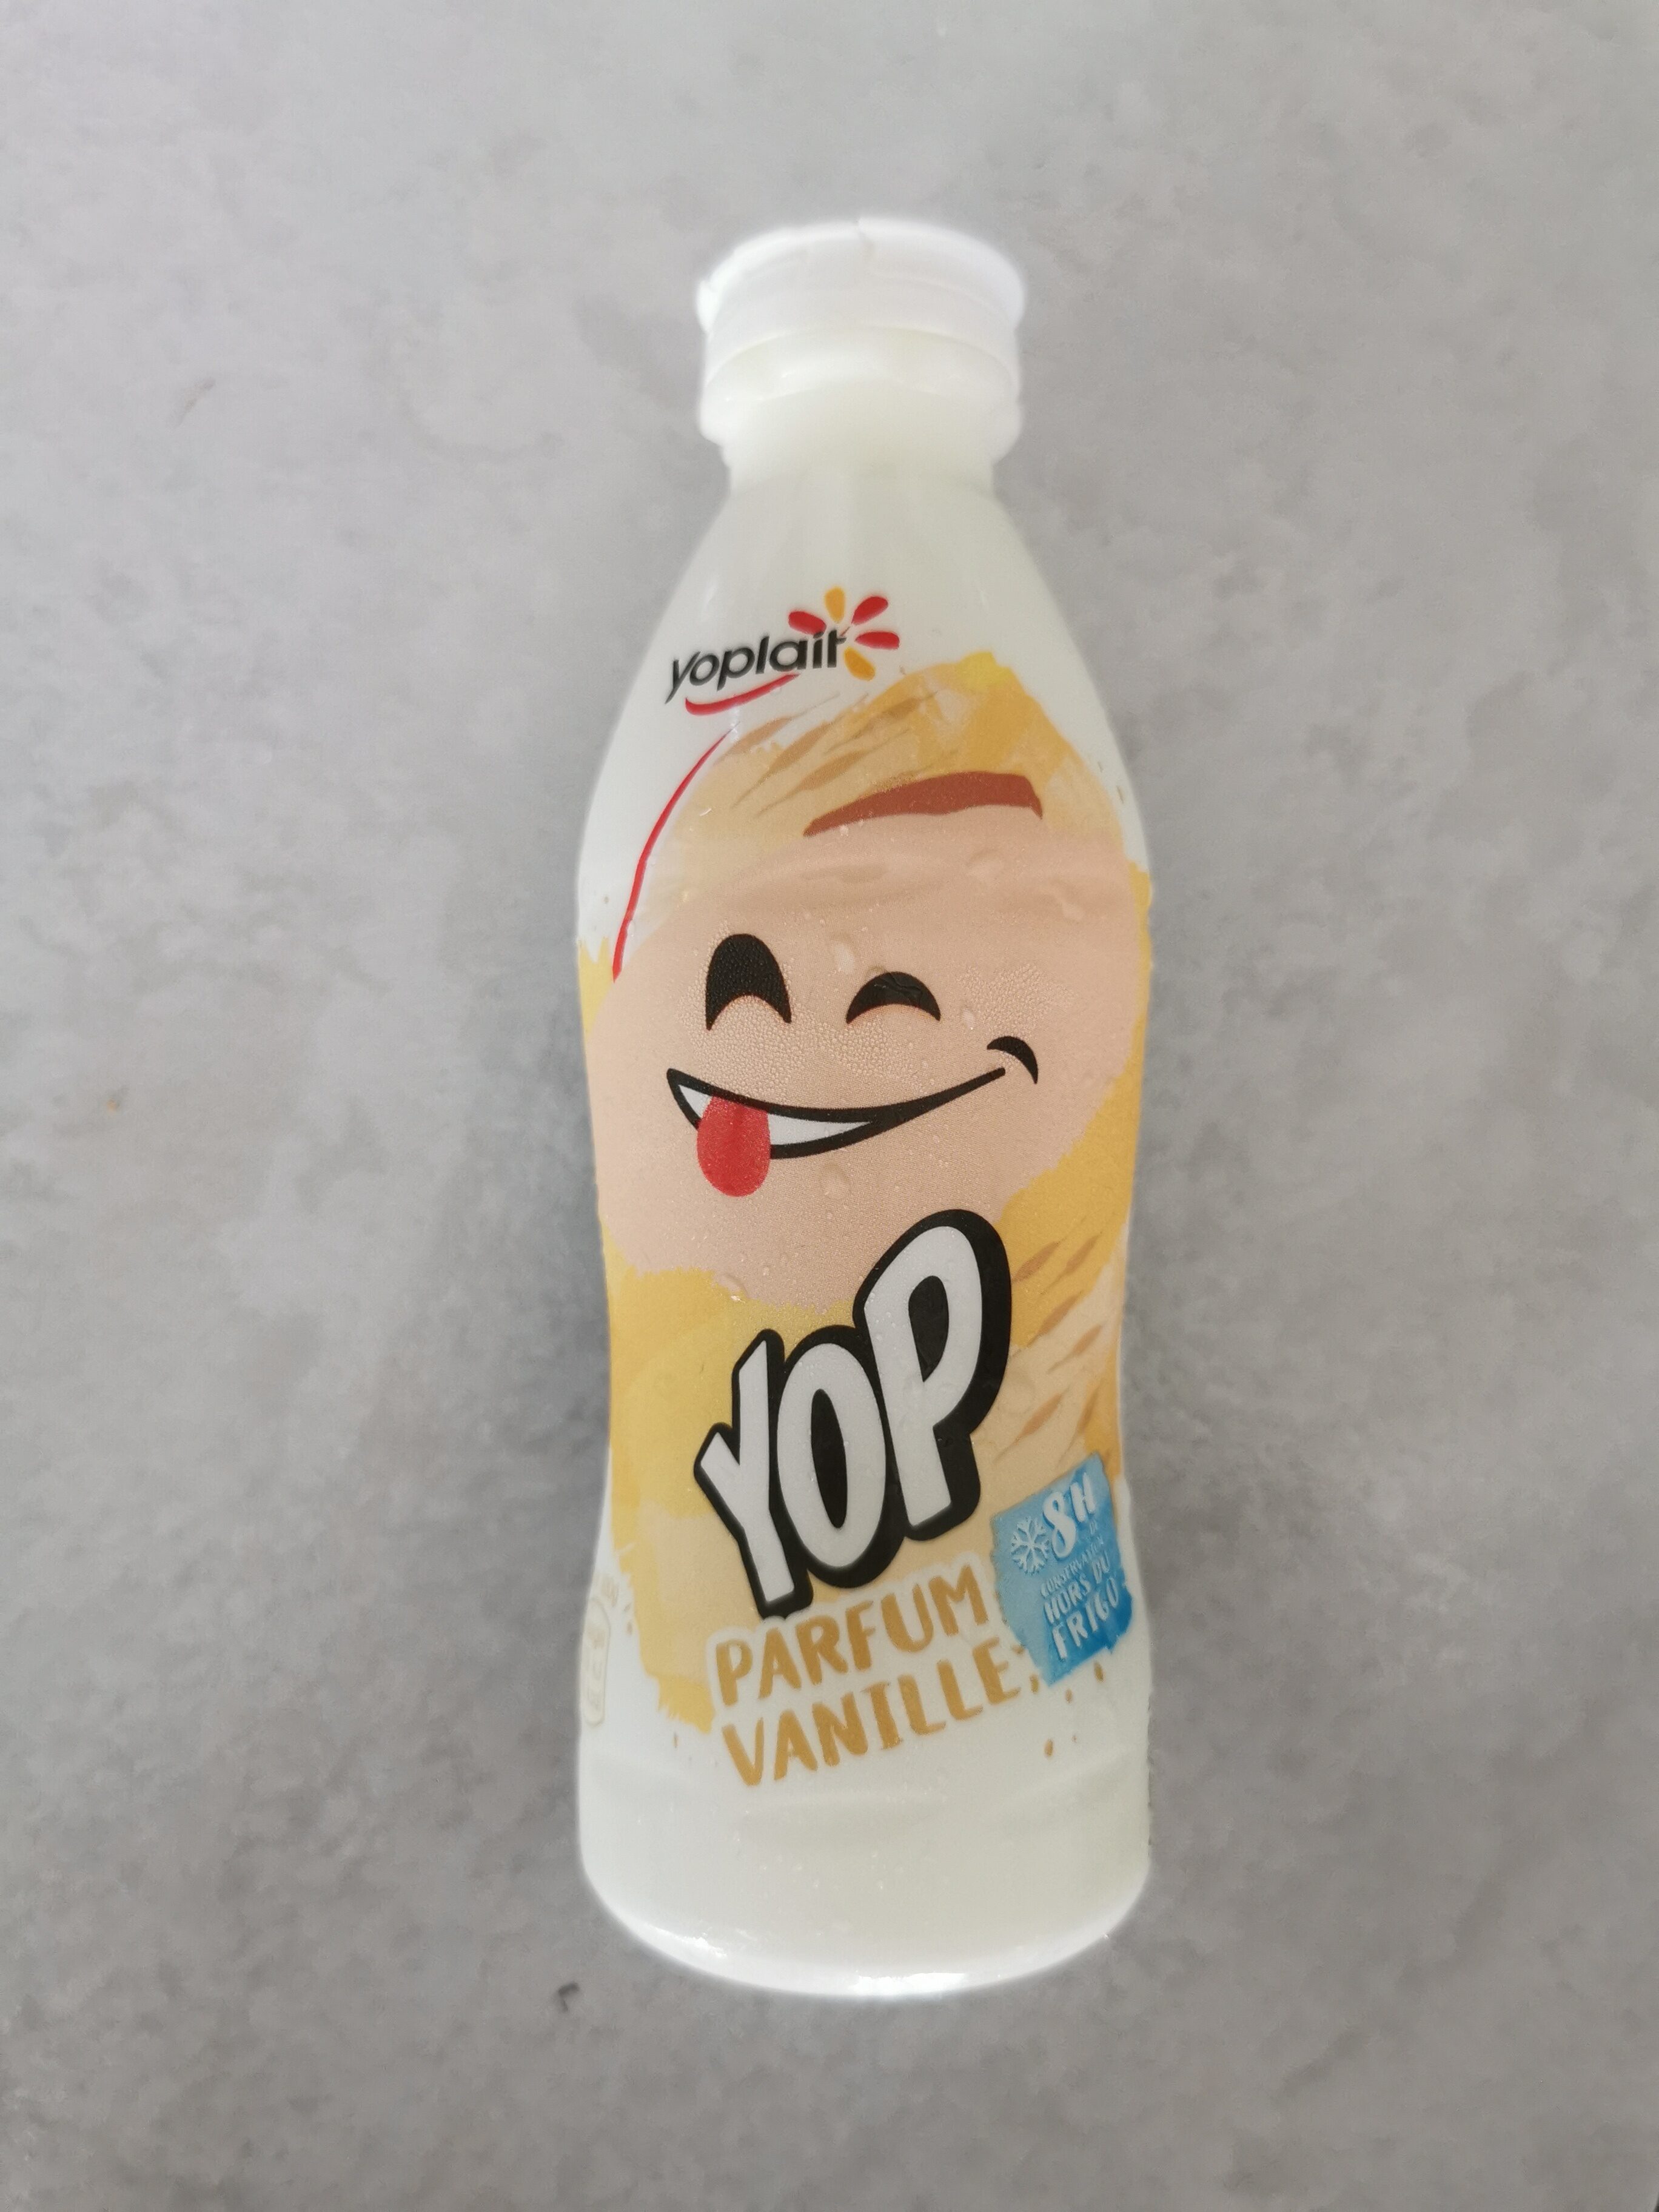 Yop parfum vanille - Produit